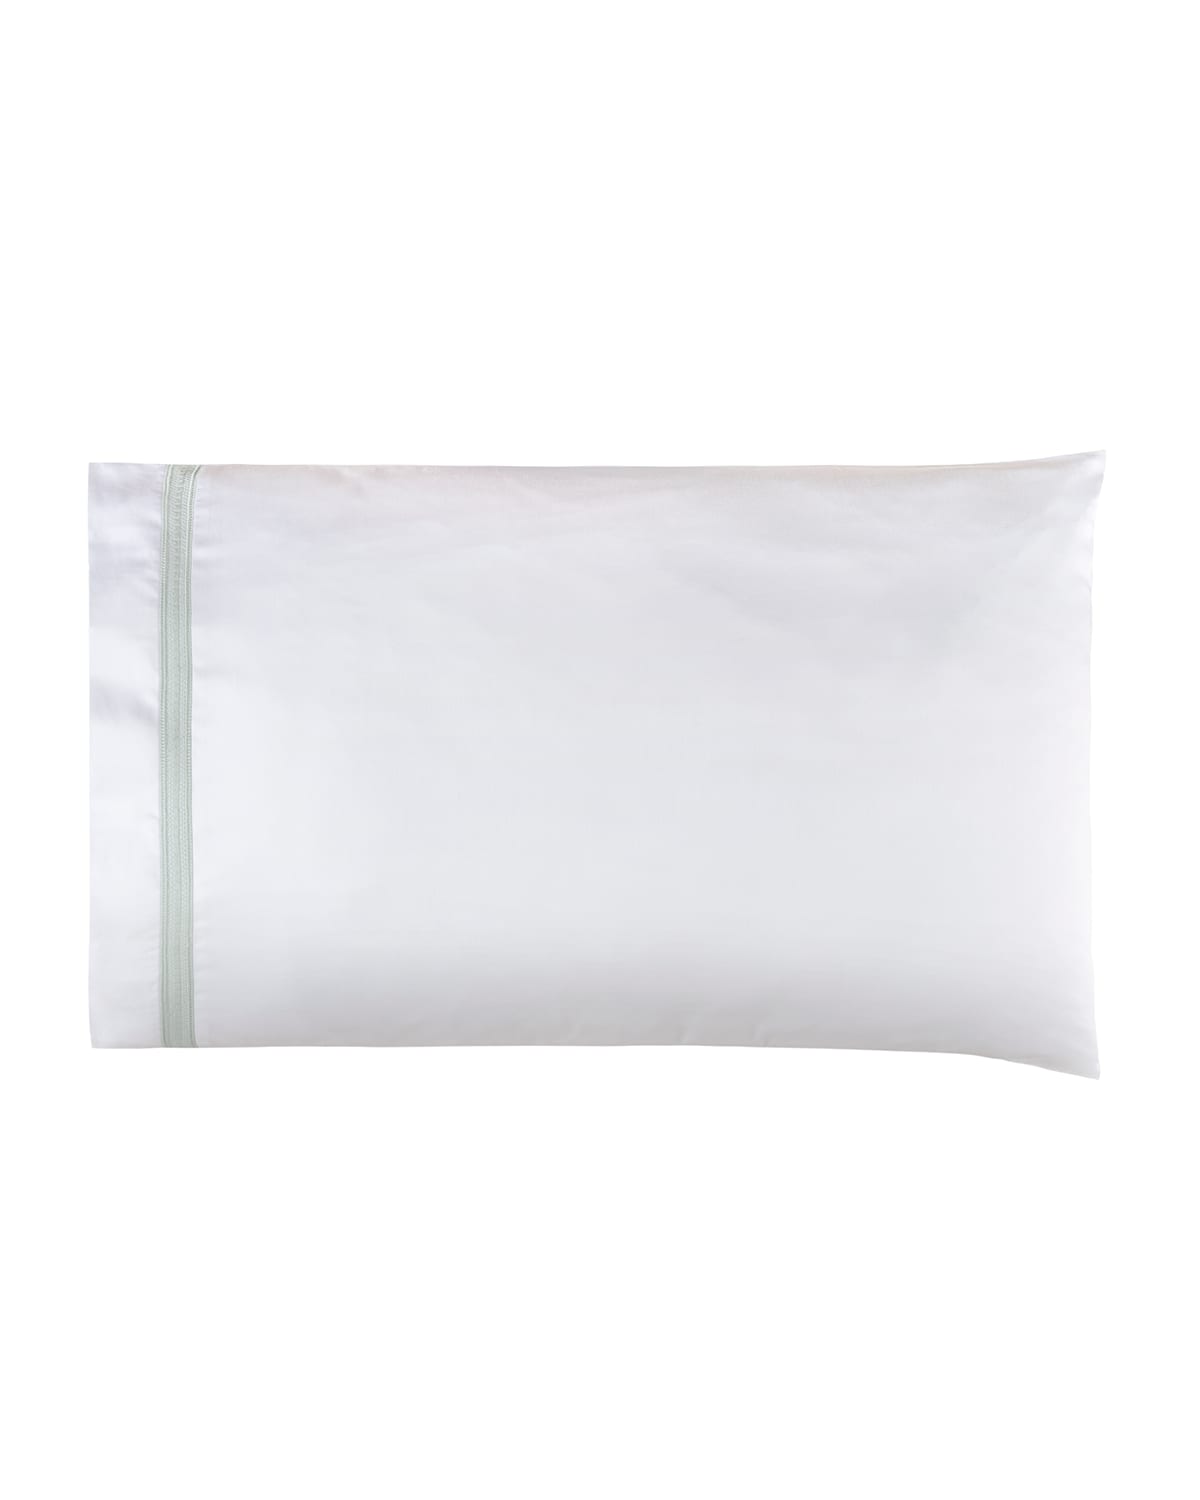 Bovi Fine Linens Devere Pair Of Standard Pillowcases In White/ Dove